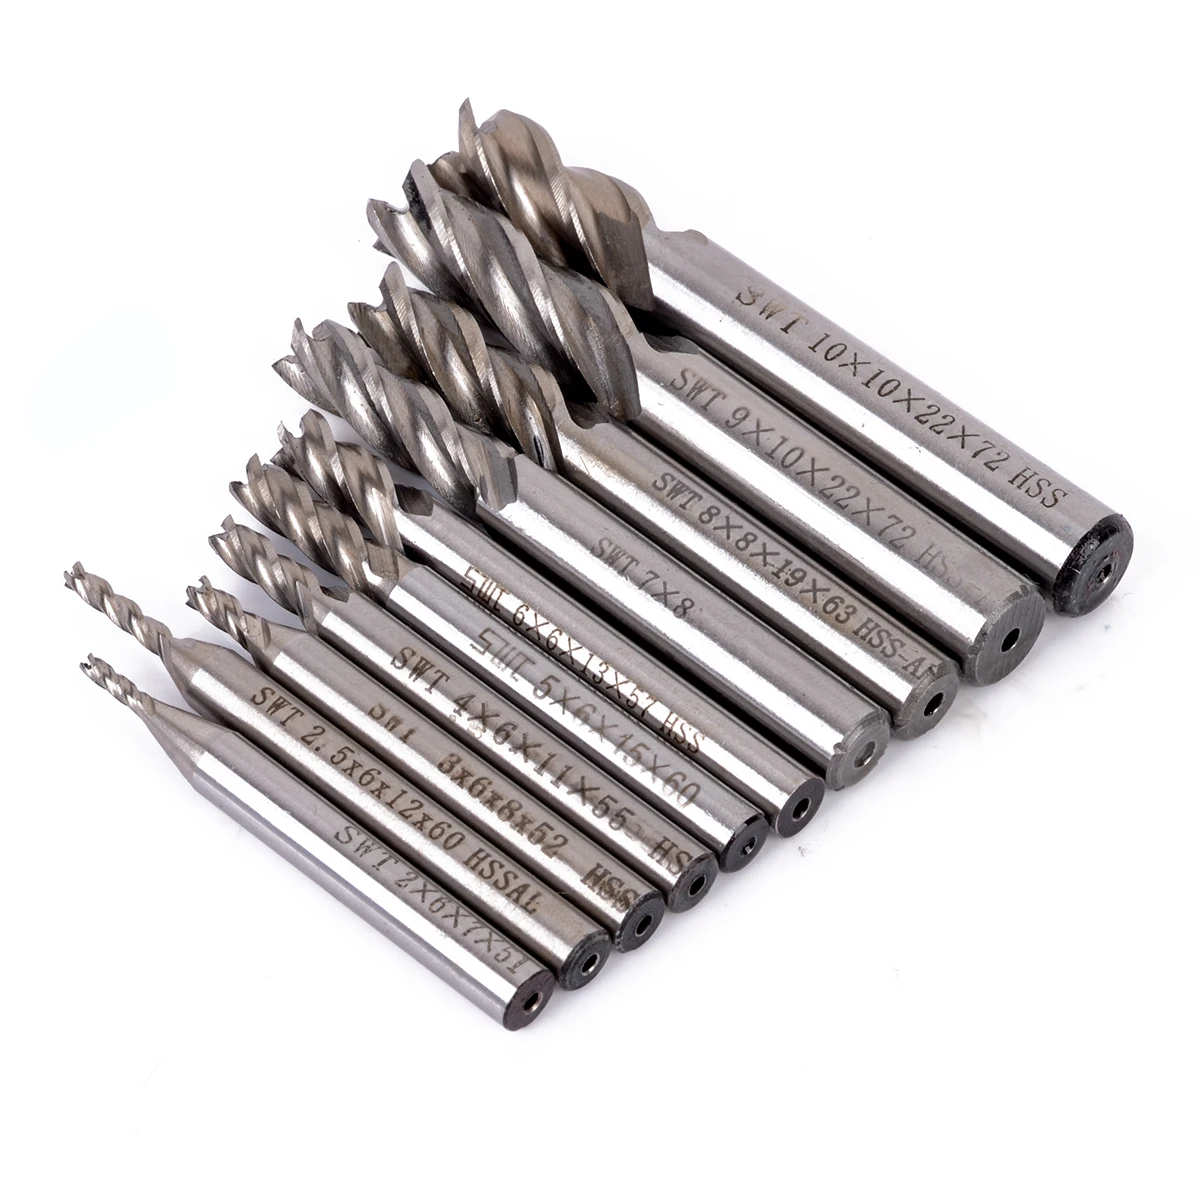 Cutting Milling Cutter Drill Bits Tools 10pcs High Speed Steel Accessories